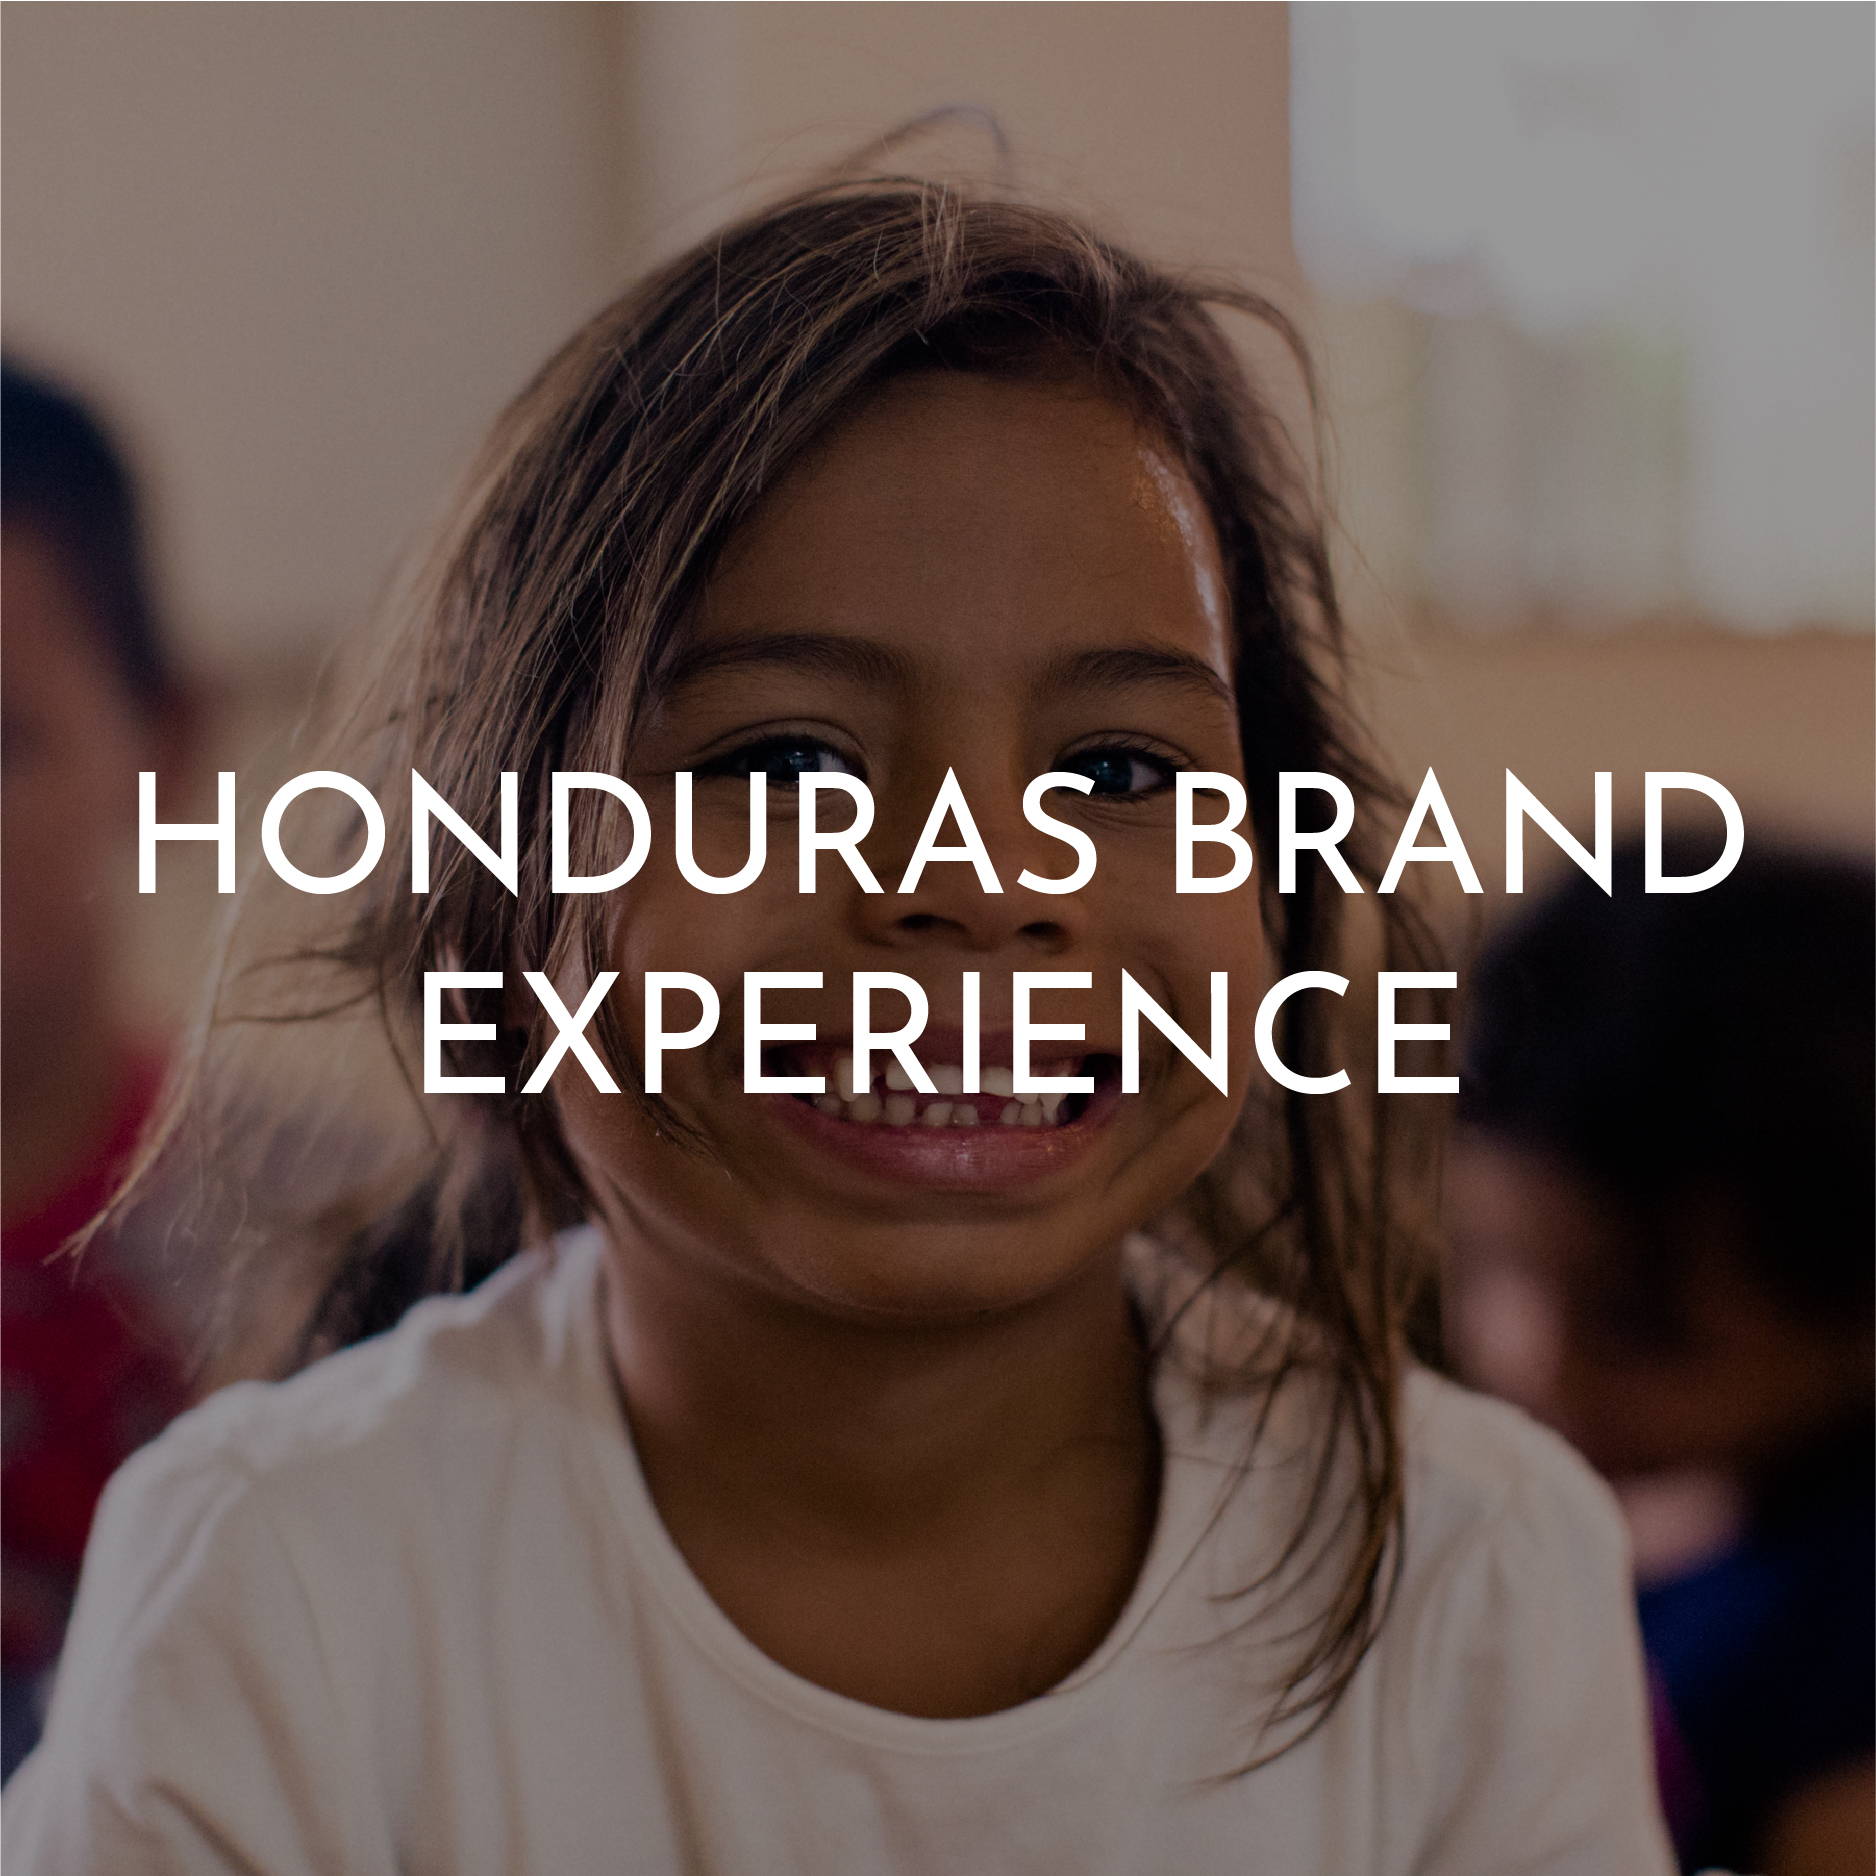 “Honduras Brand Experience” Is written on top of a smiling Honduran girl wearing a white t-shirt 